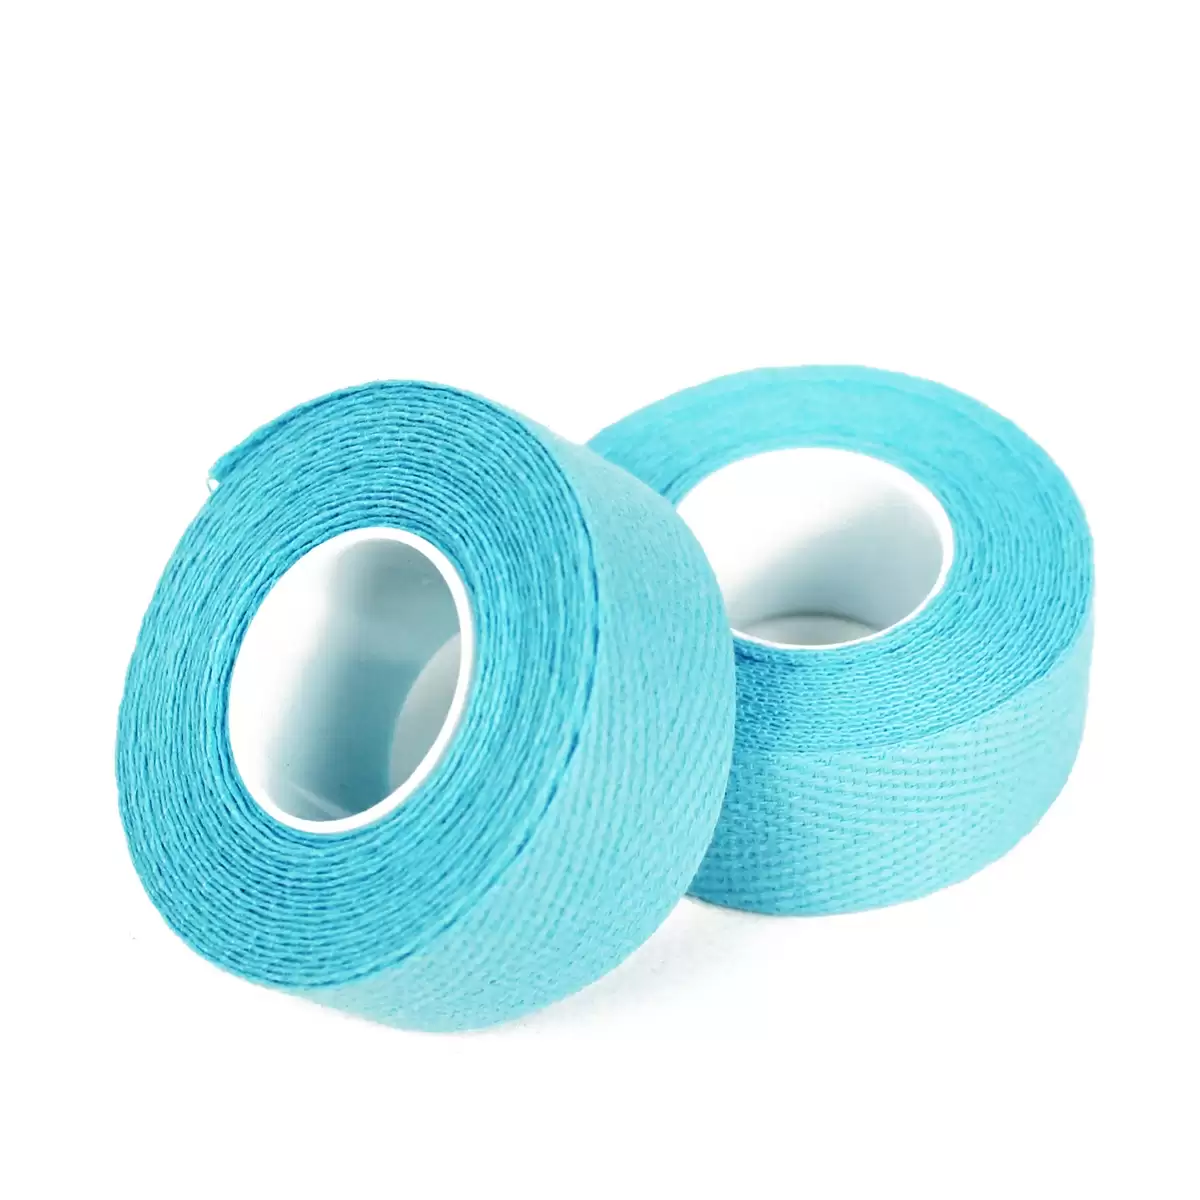 Pair cotton vintage retrò handlebar tape turquoise - image